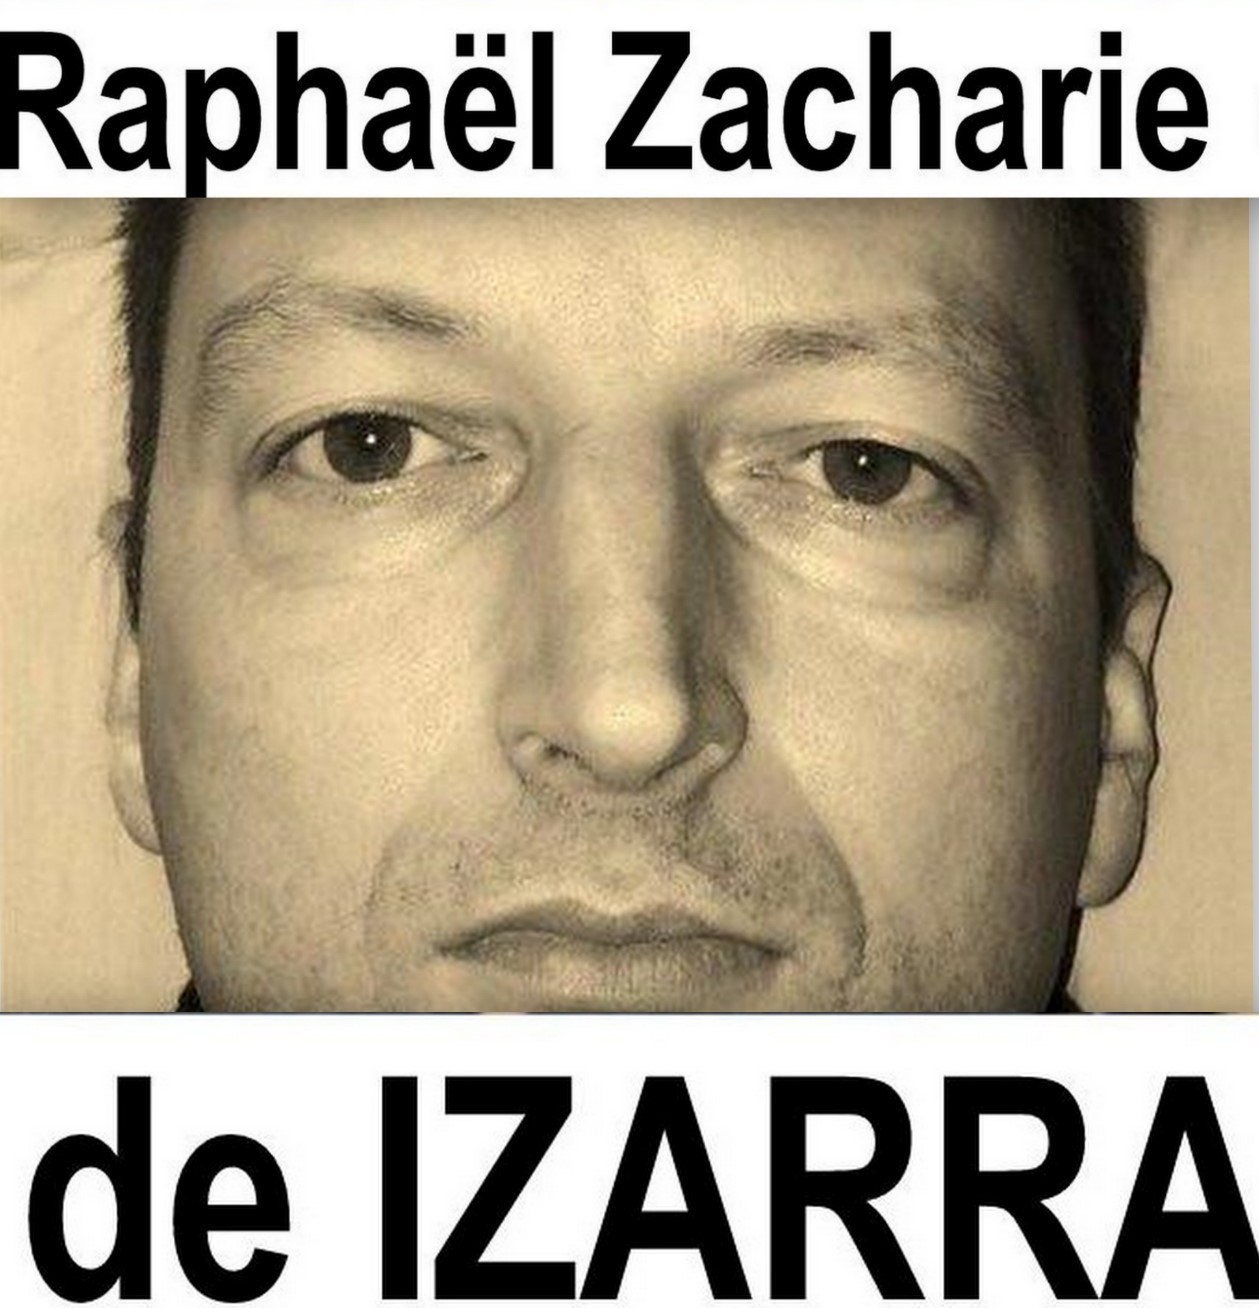 Raphaël Zacharie De Izarra Ovni Warloy Baillon Ufo Raphaël Zacharie De Izarra Warloy Baillon